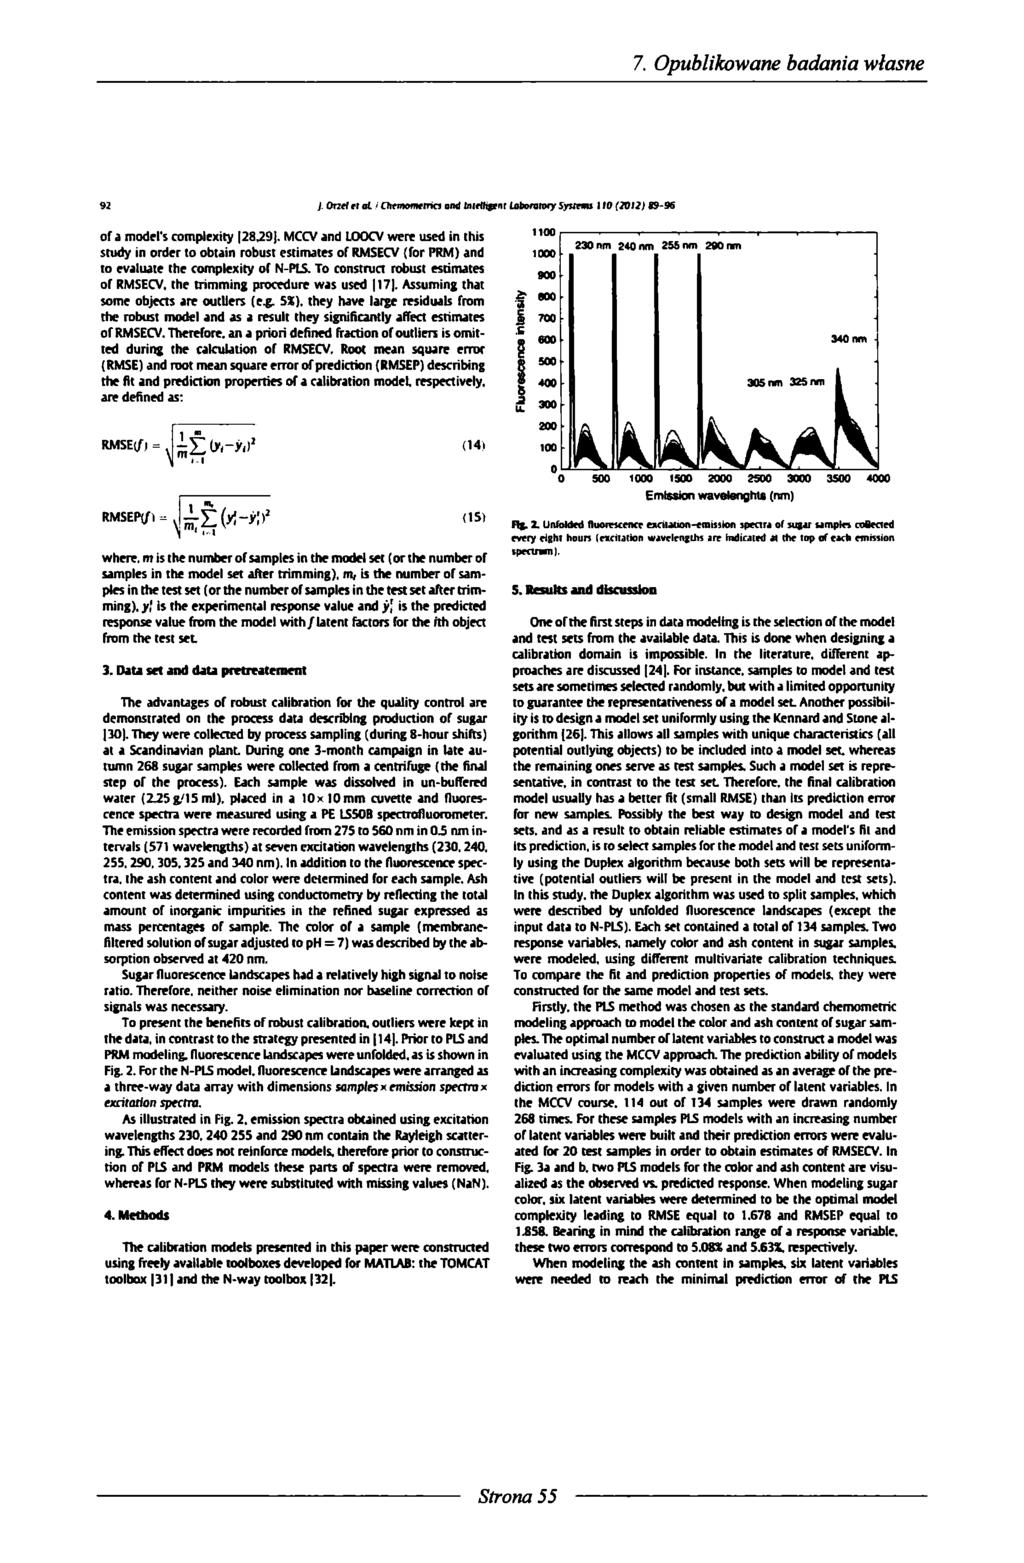 J. OrzWet al / Oimemeirio and Znirthfrnr laboratory Syuewu J10 (2012) 89-96 of i model's complexity 28,29J.